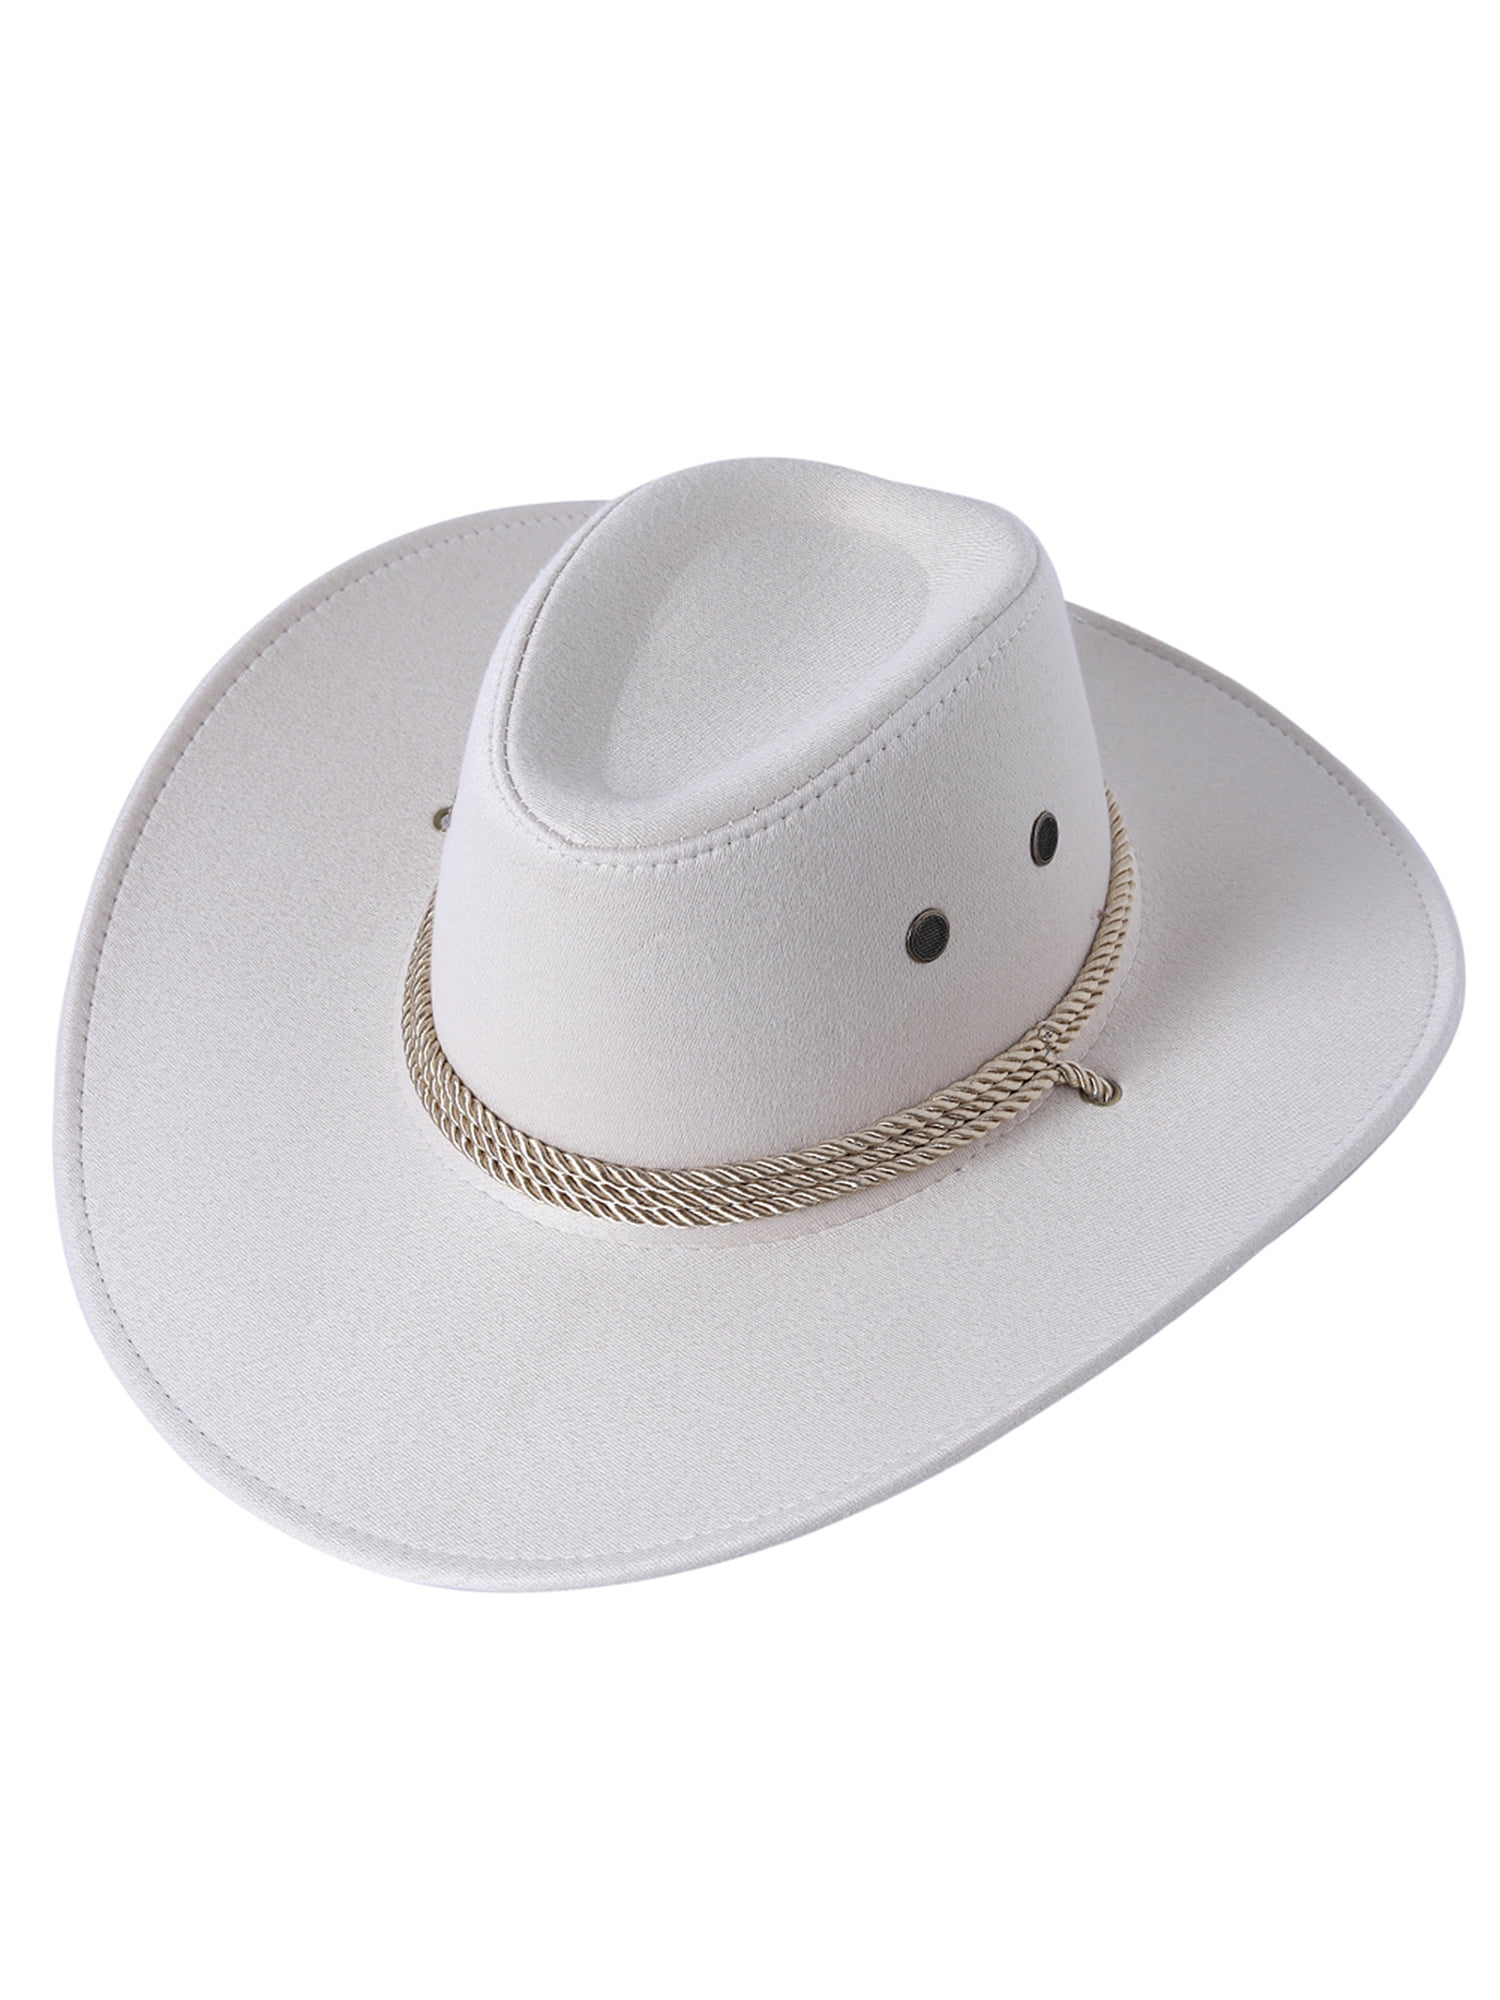 Men Cowboy Hat with Adjustable Chin Rope Wide Brim Vintage Style